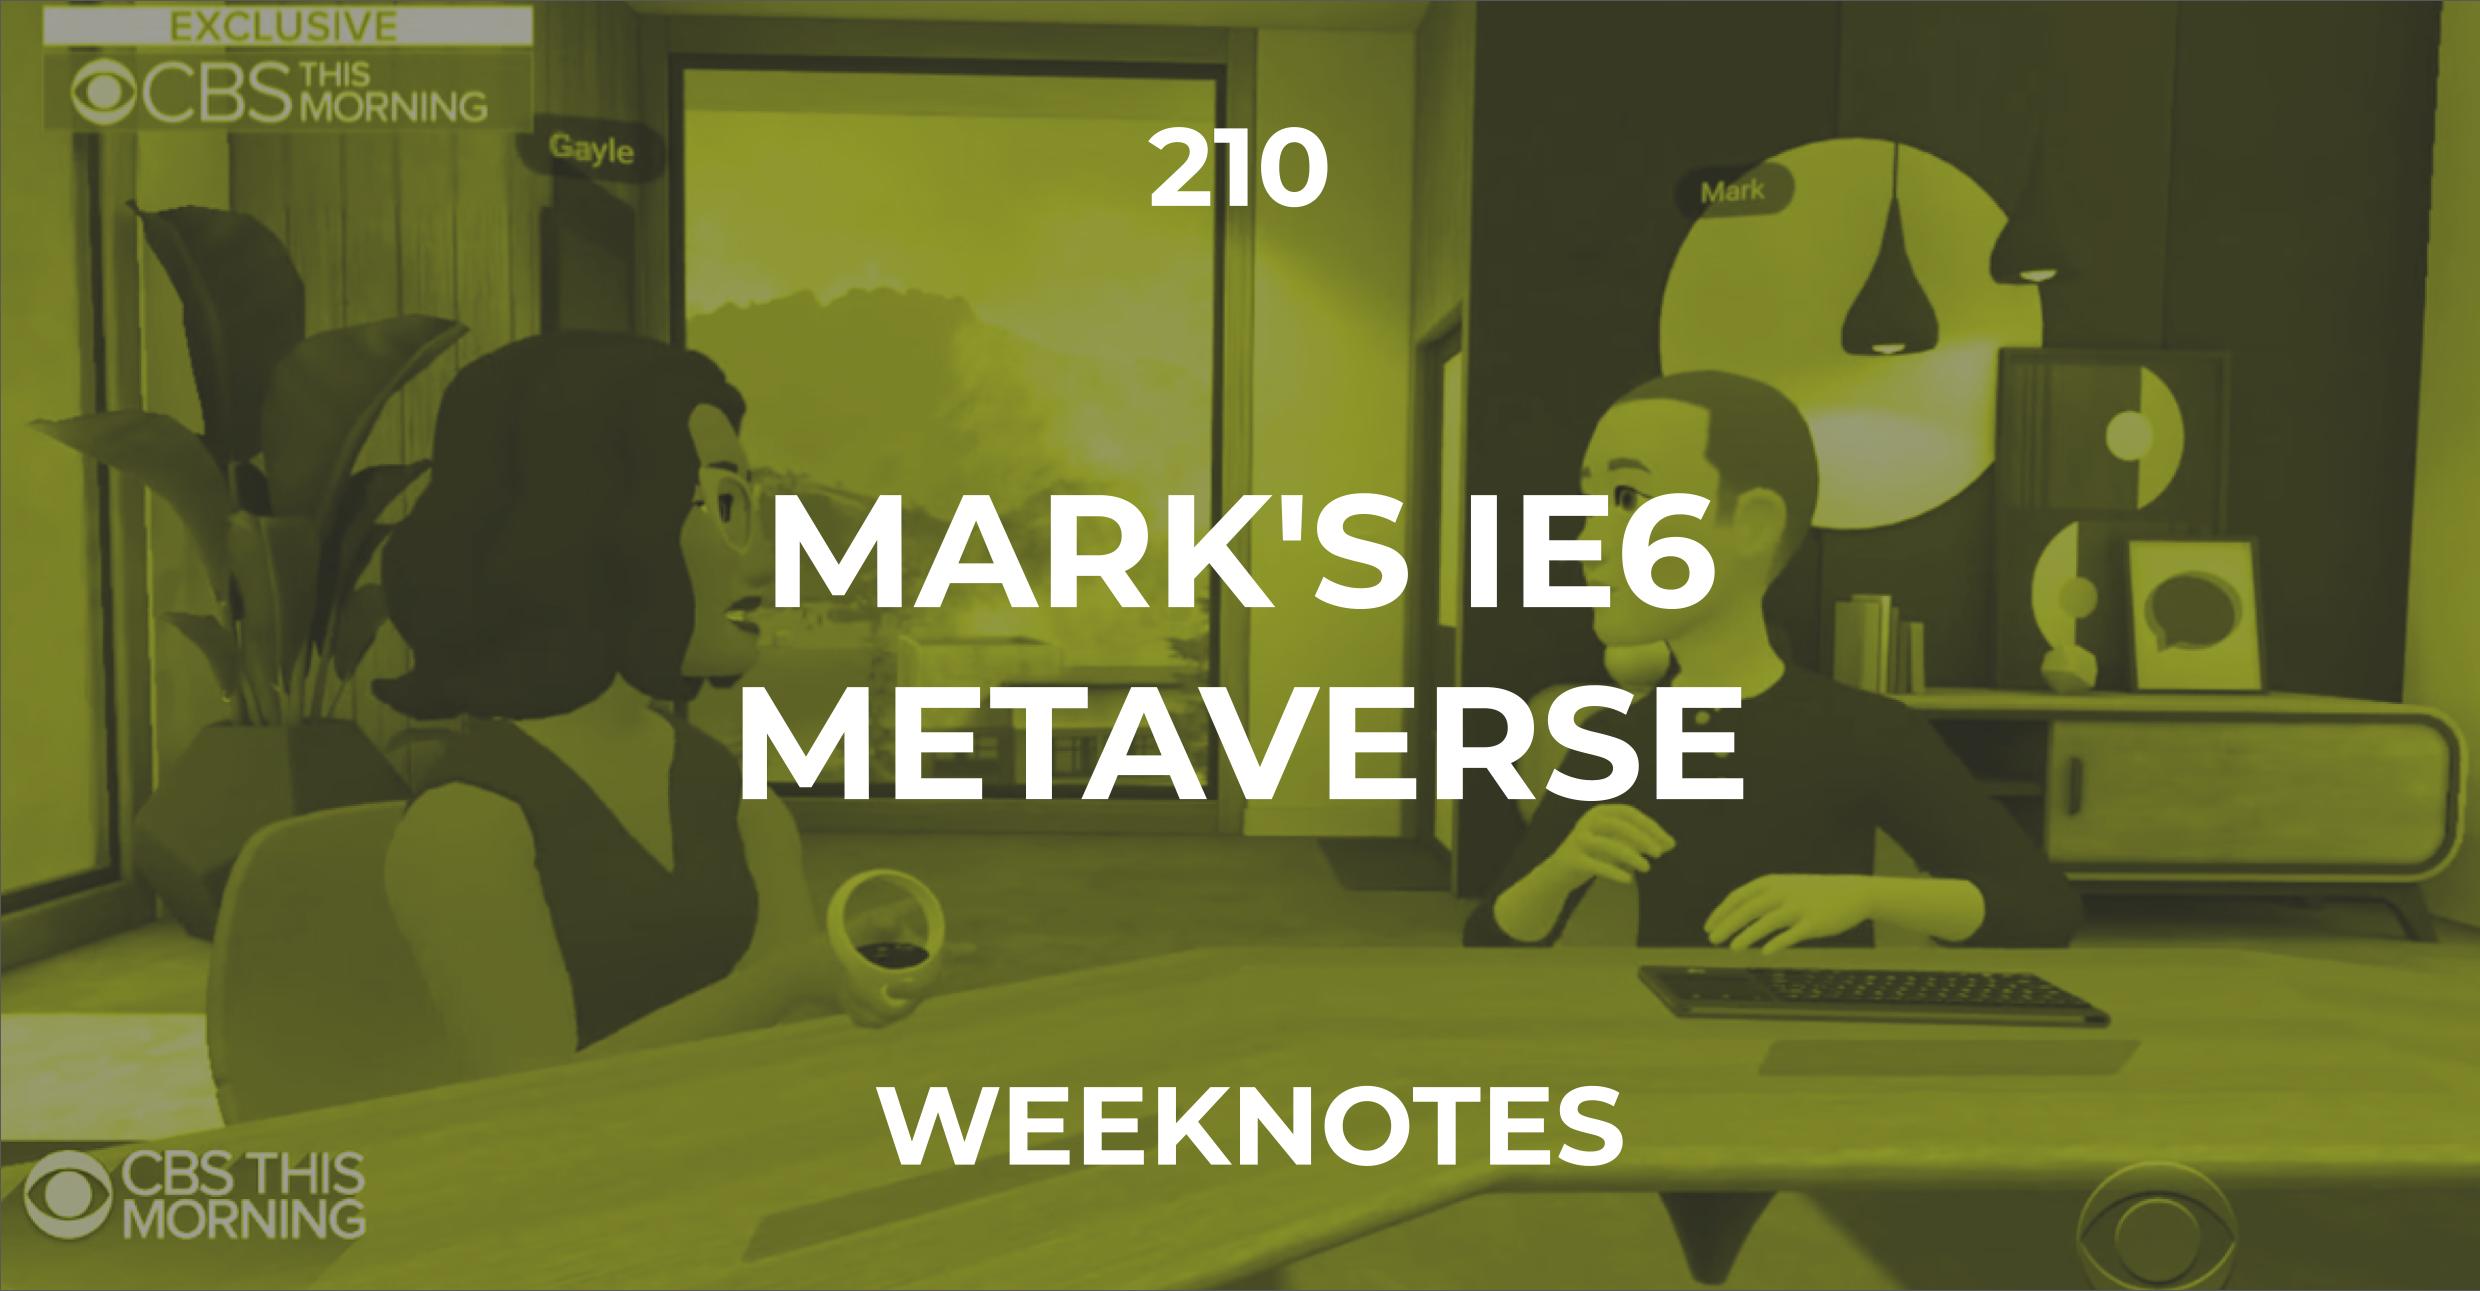 Mark’s IE6 Metaverse